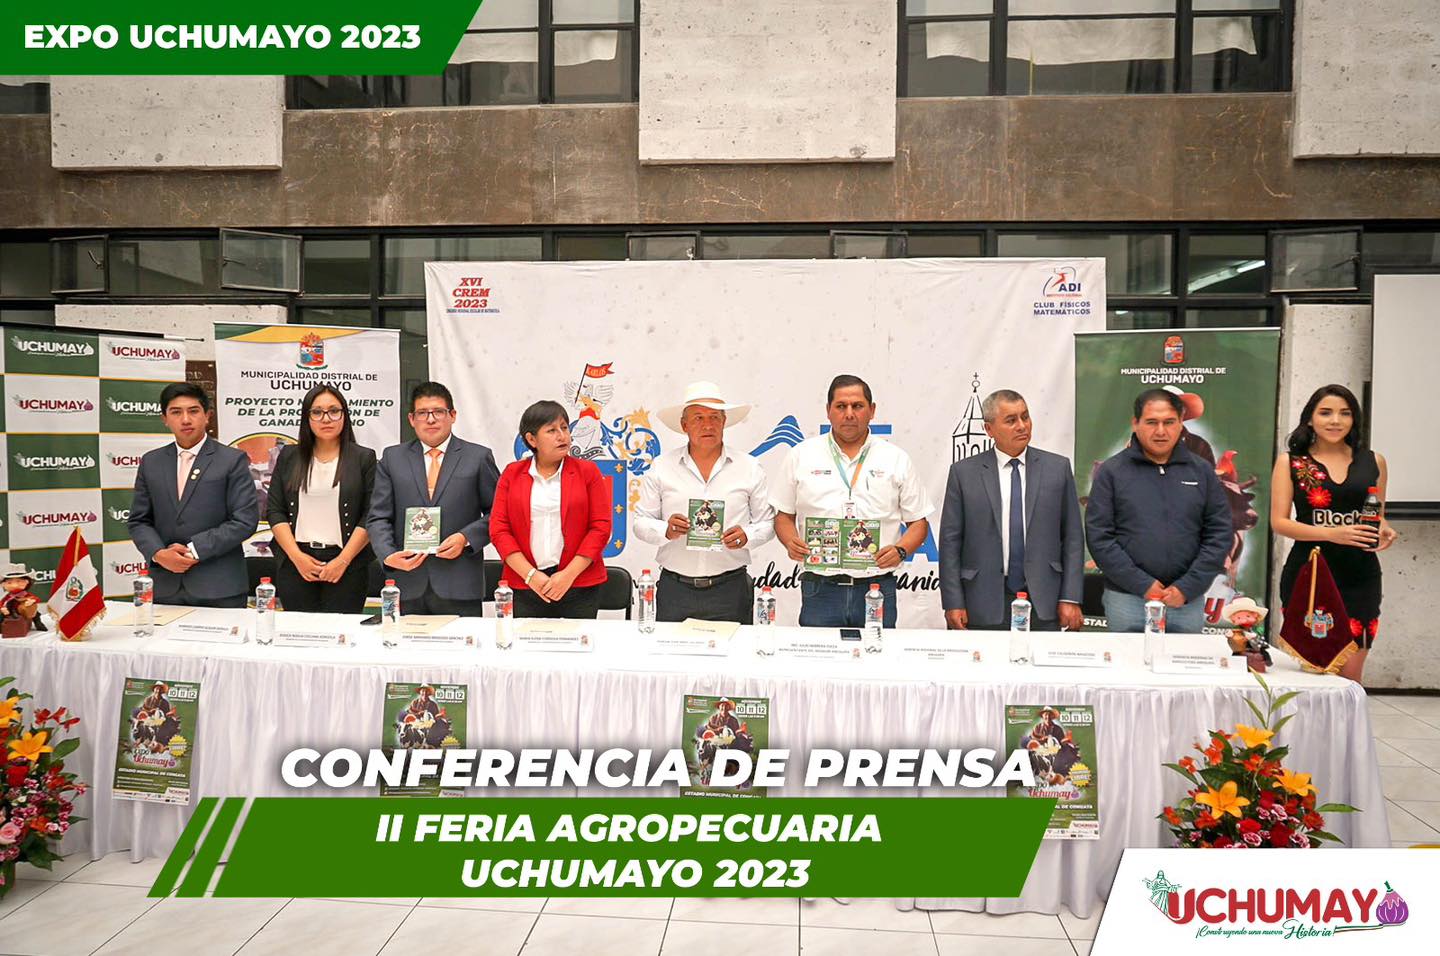 Conferencia de prensa II Feria Agropecuaria Regional Uchumayo 2023 “Expo Uchumayo”